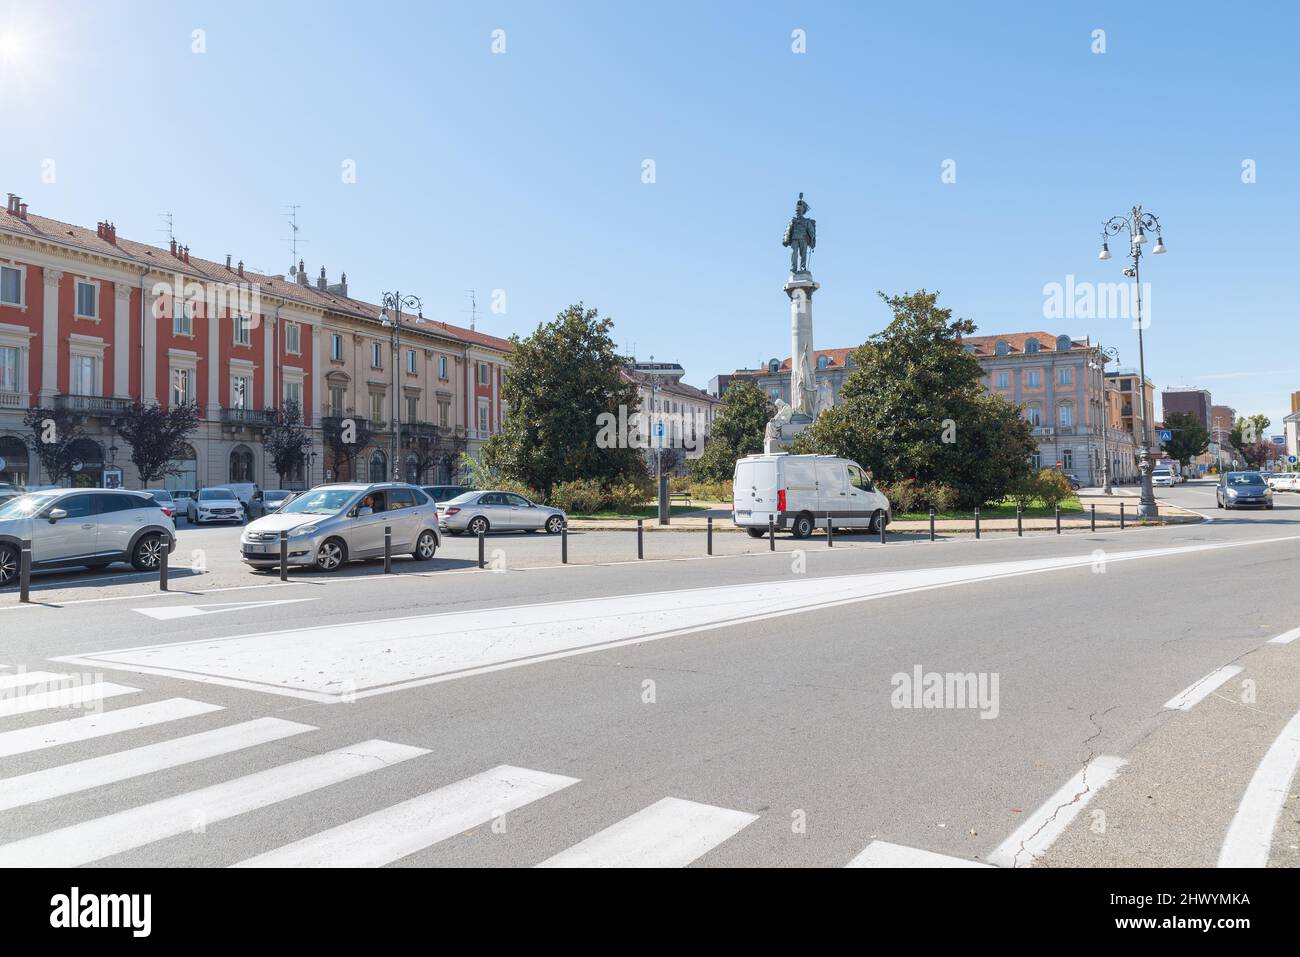 Vercelli ciudad y plaza Pajetta Nedo, Italia.Peatonal cruce en la ciudad Foto de stock